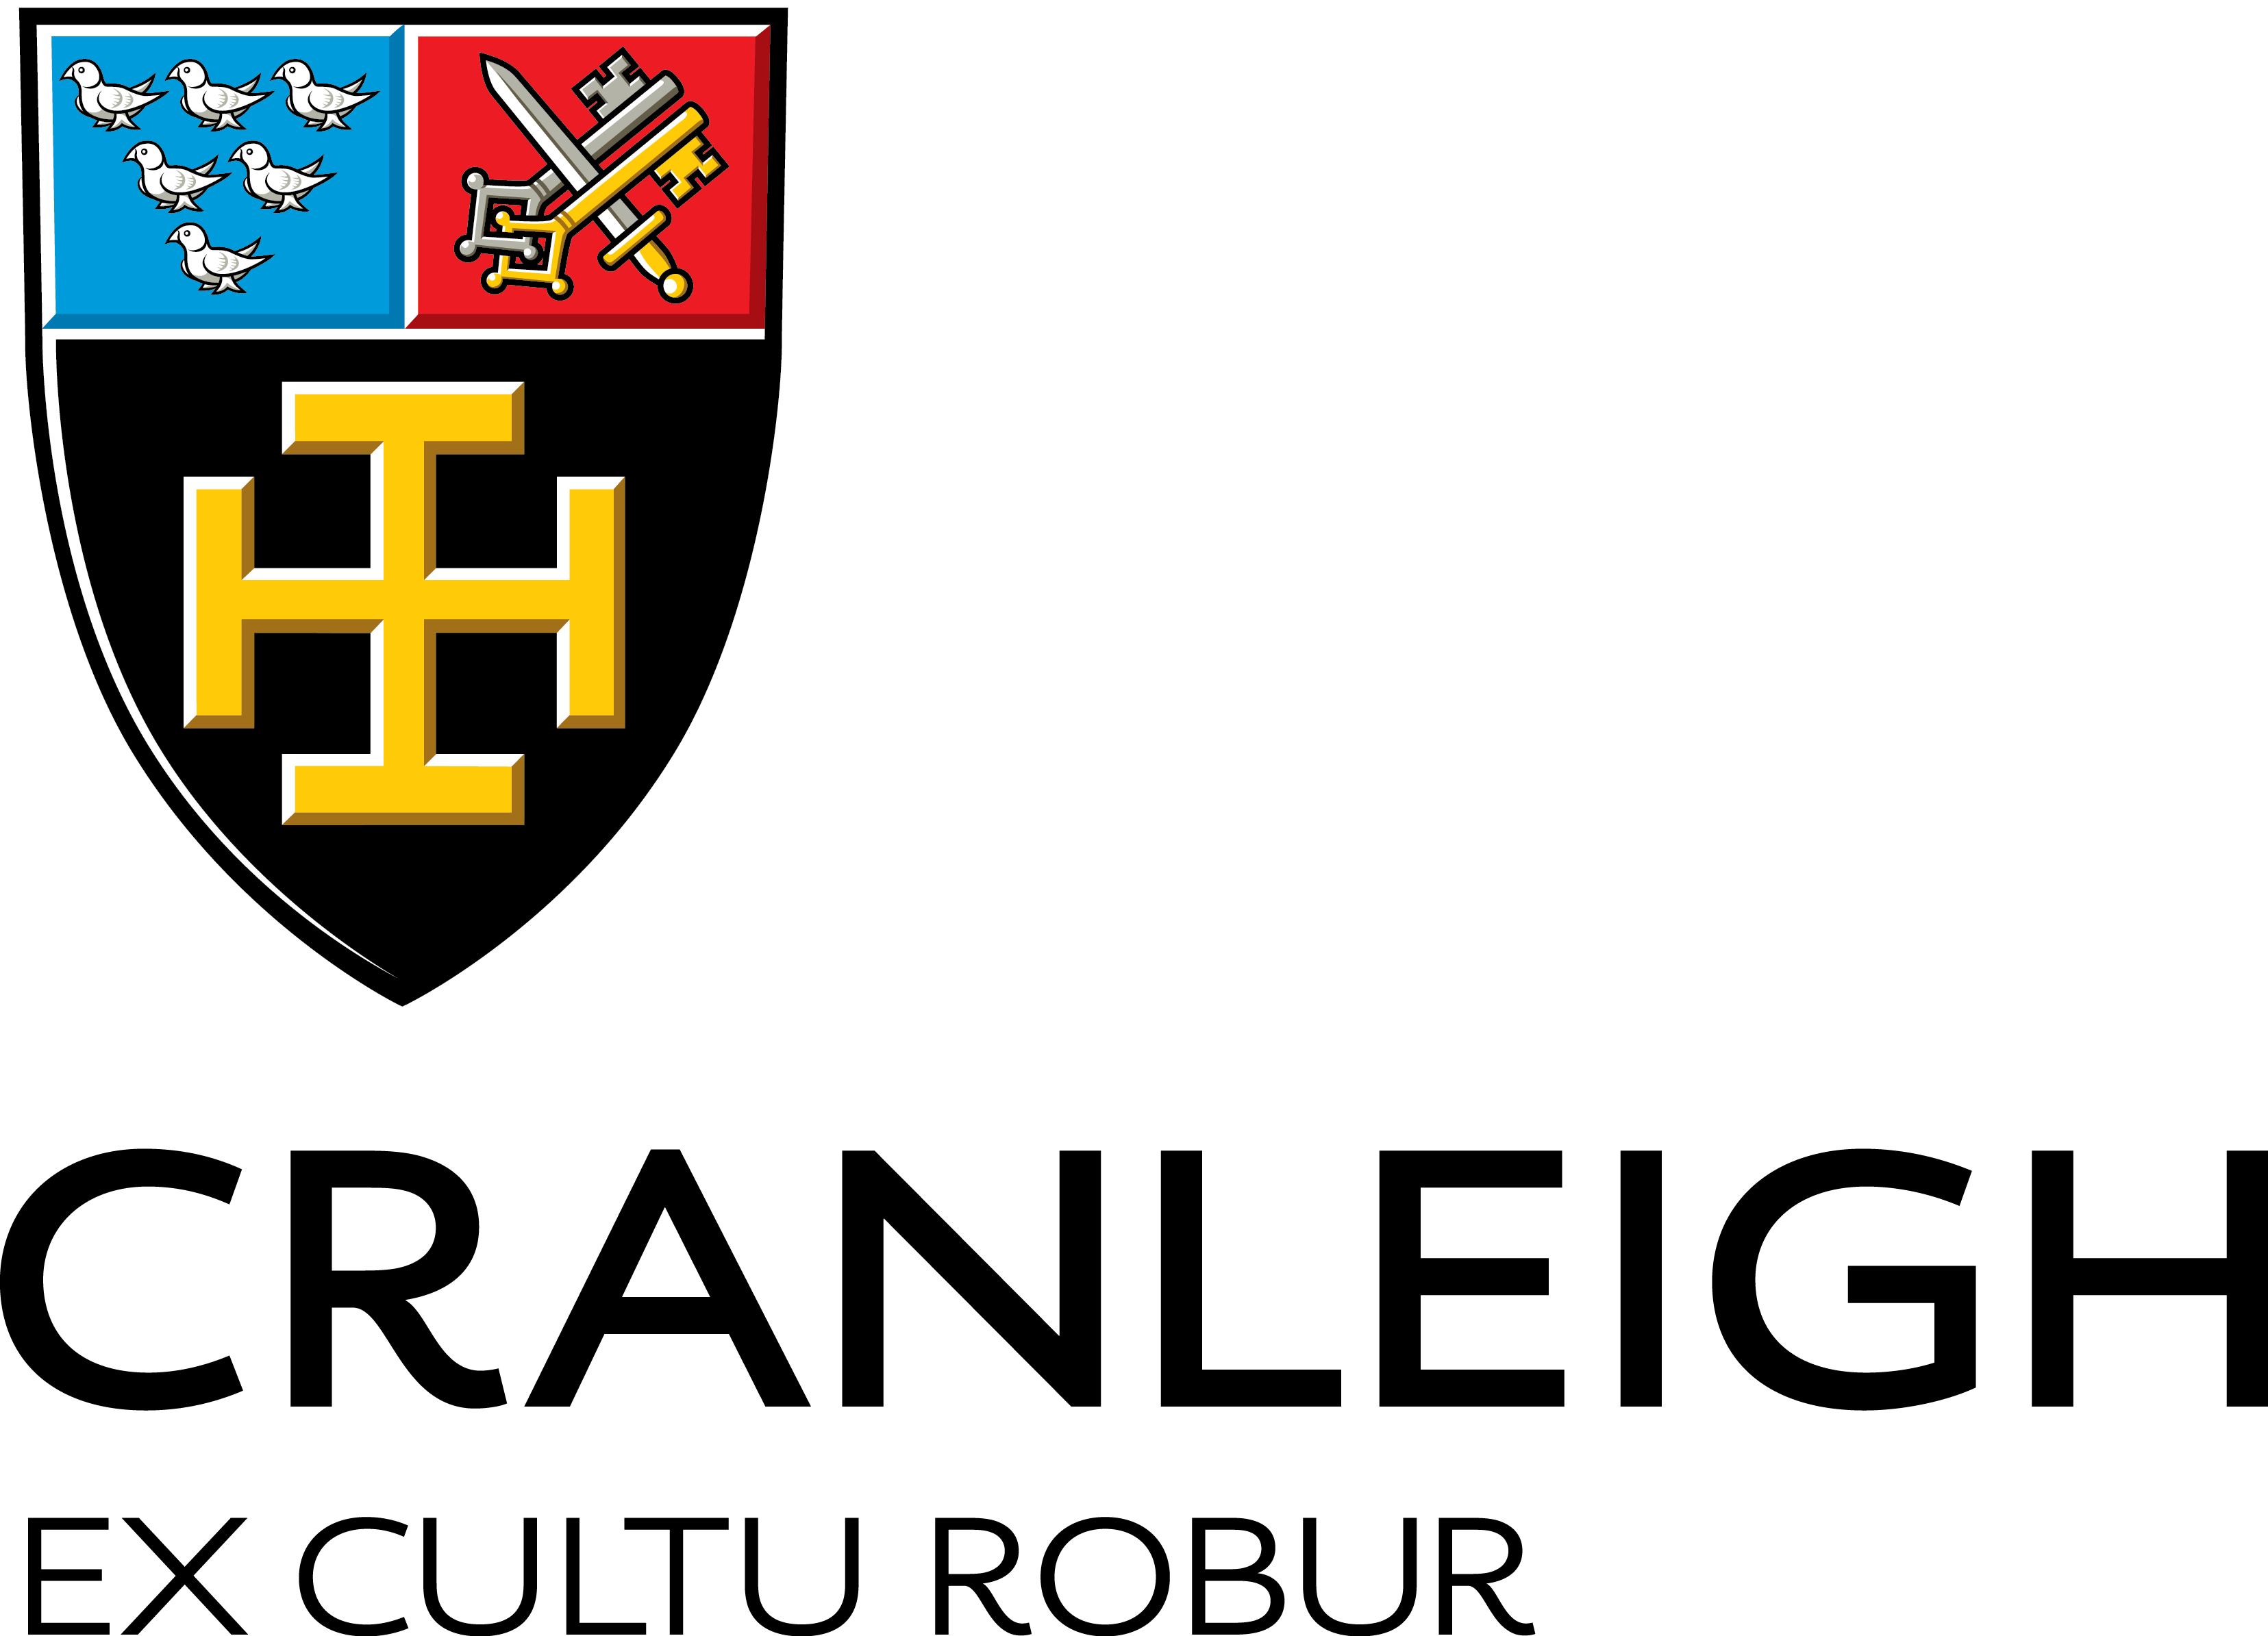 Cranleigh School emblem